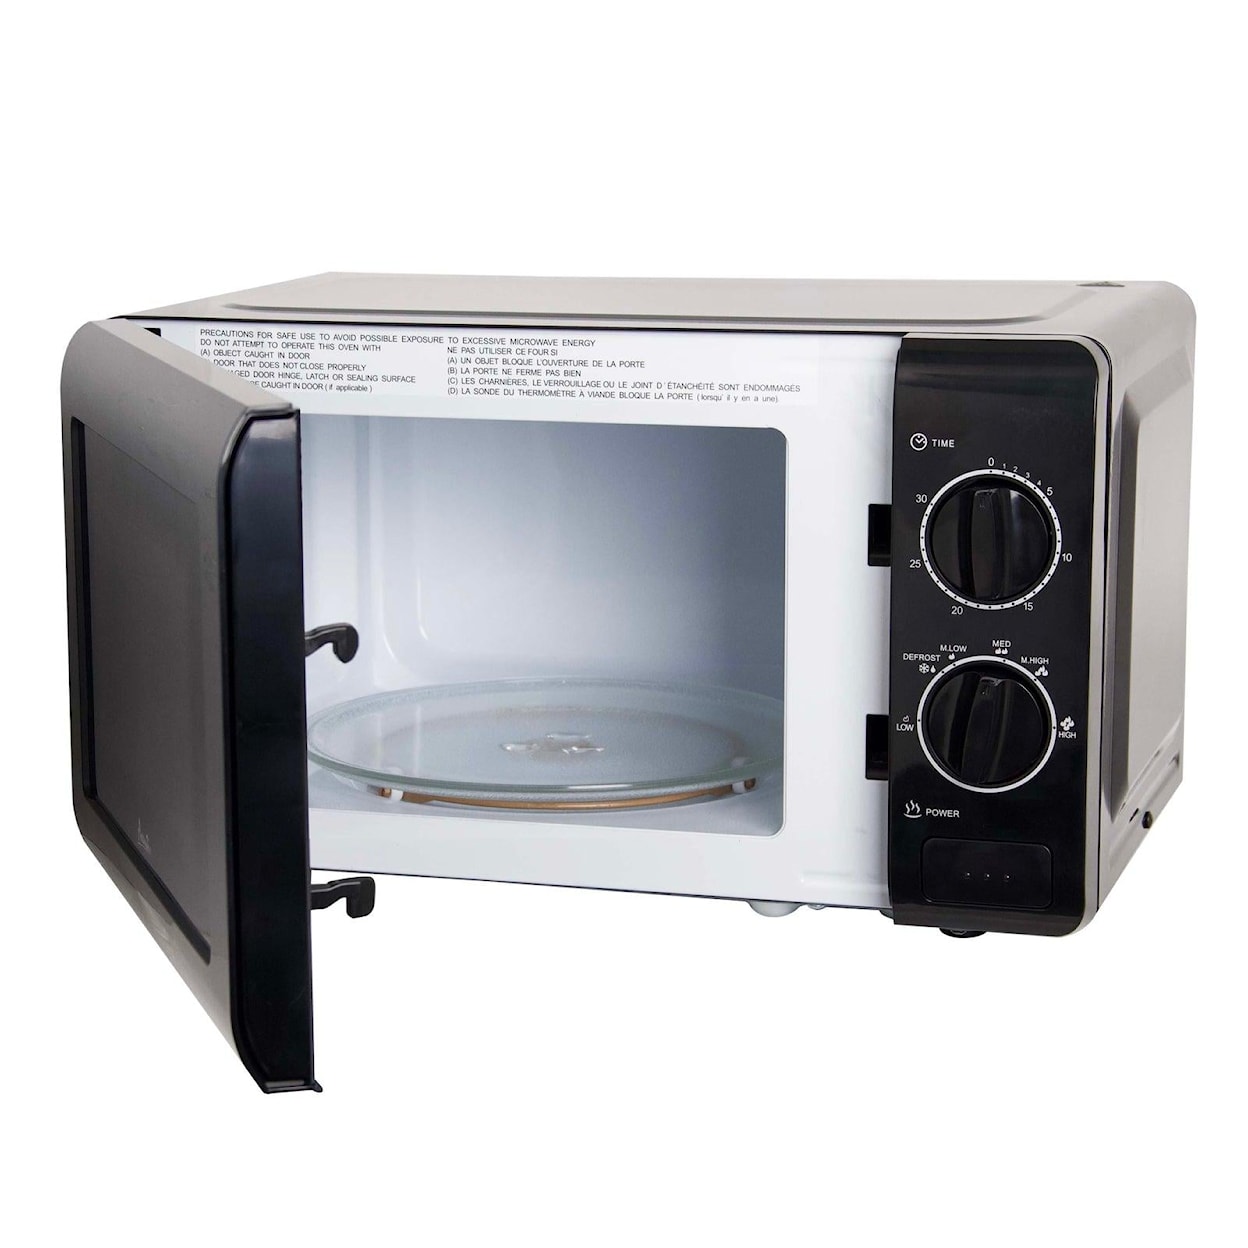 Avanti Microwave Microwave